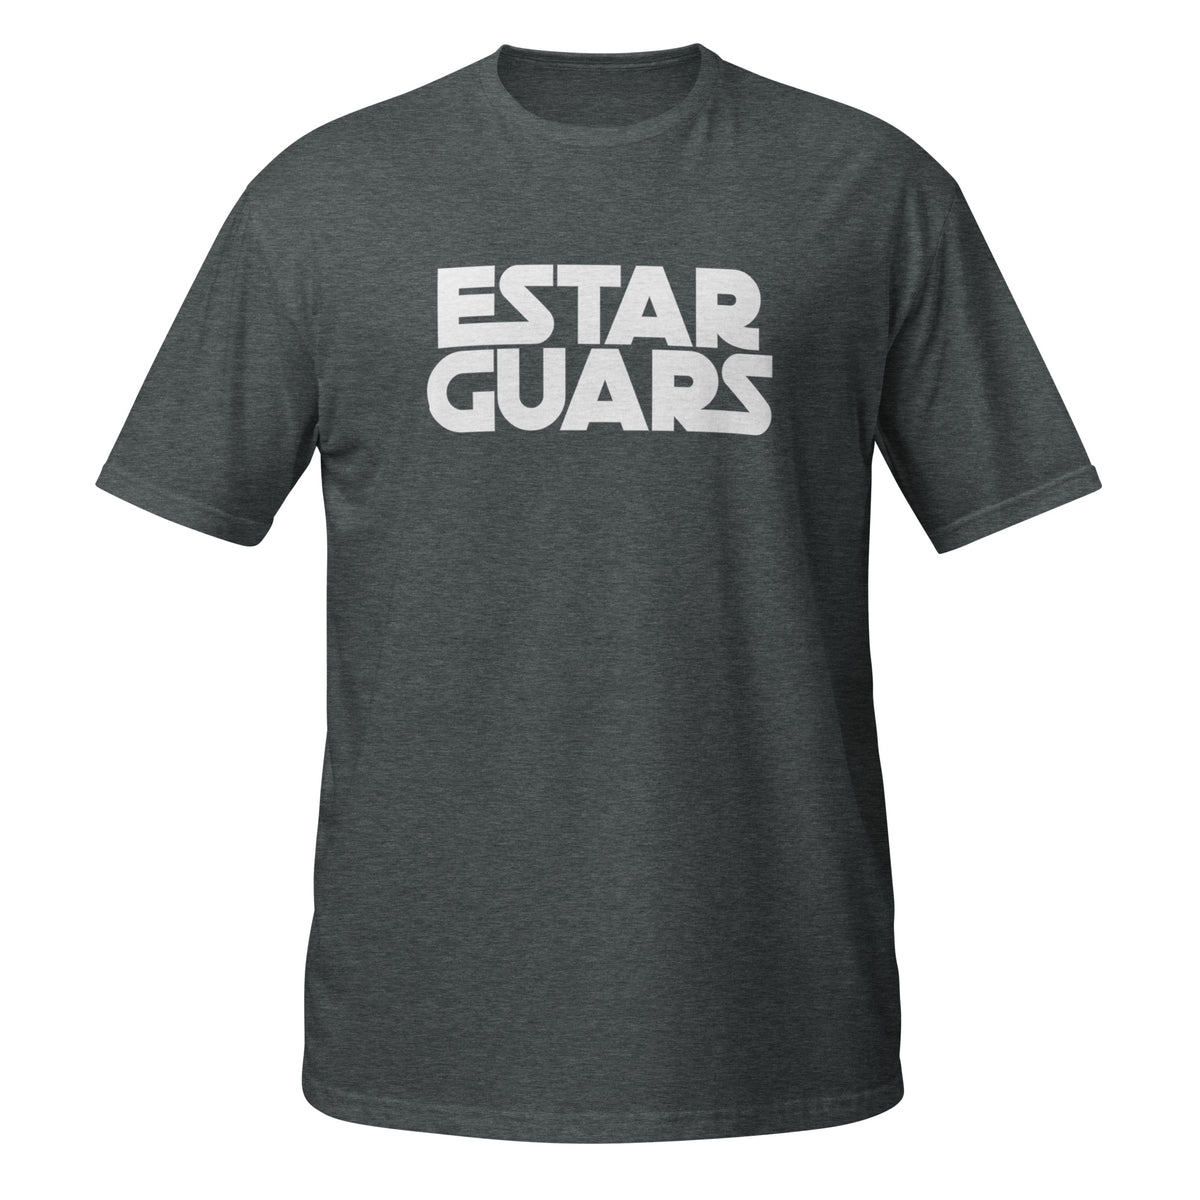 Camiseta Estar Guars (Star Wars)